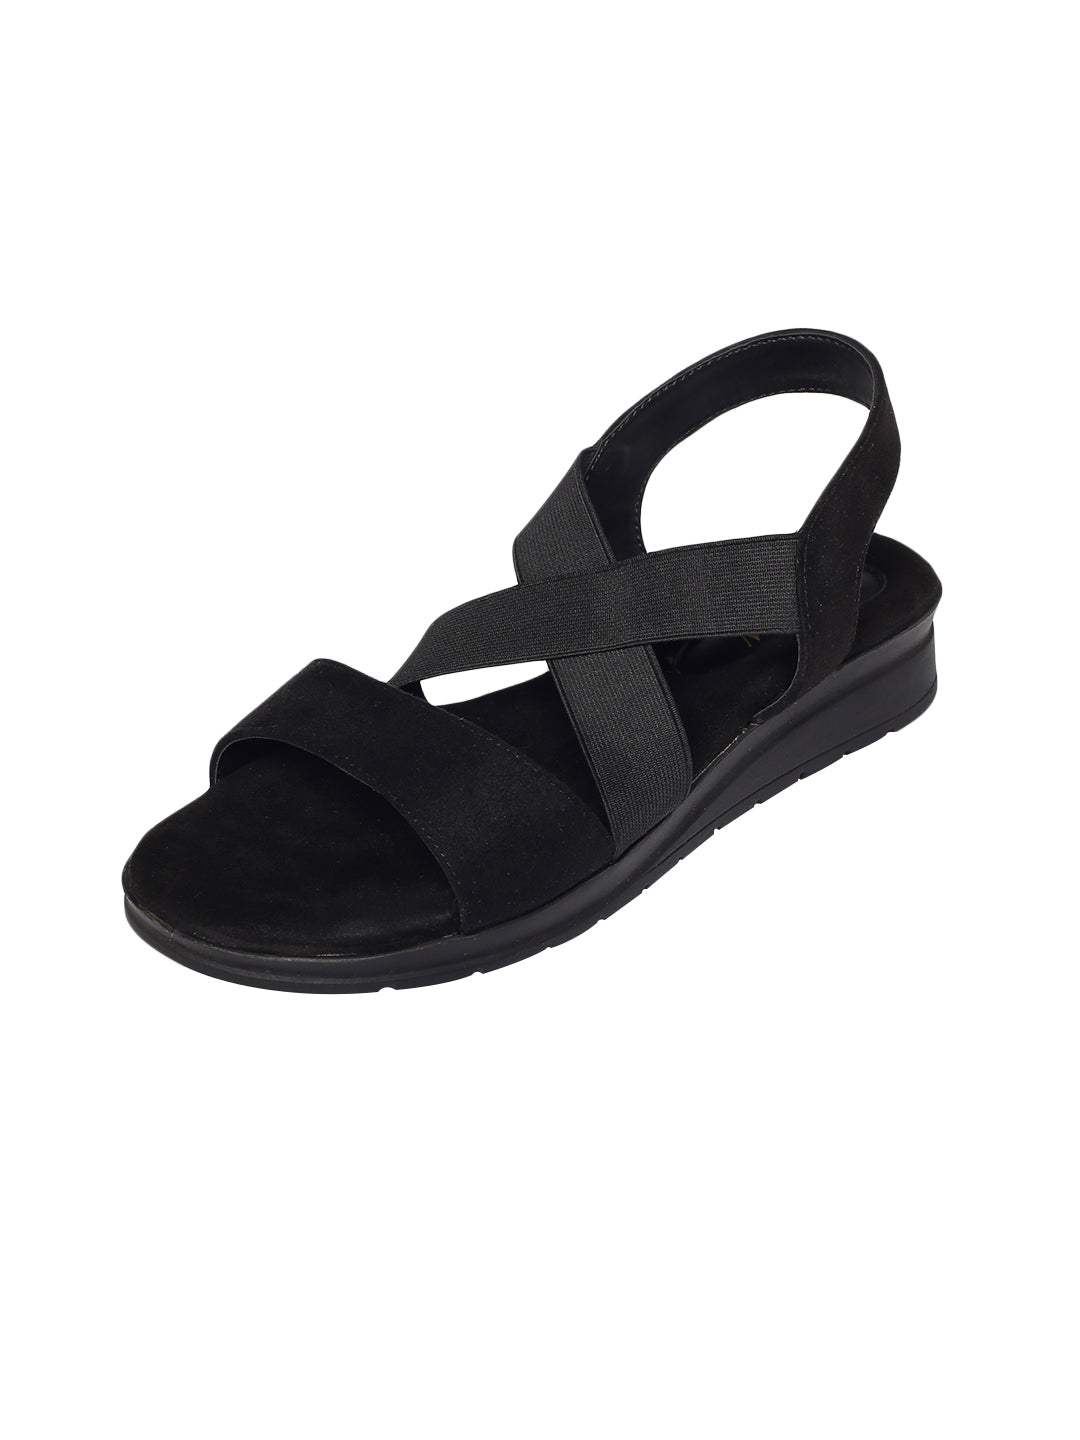 Emel Black Sandals